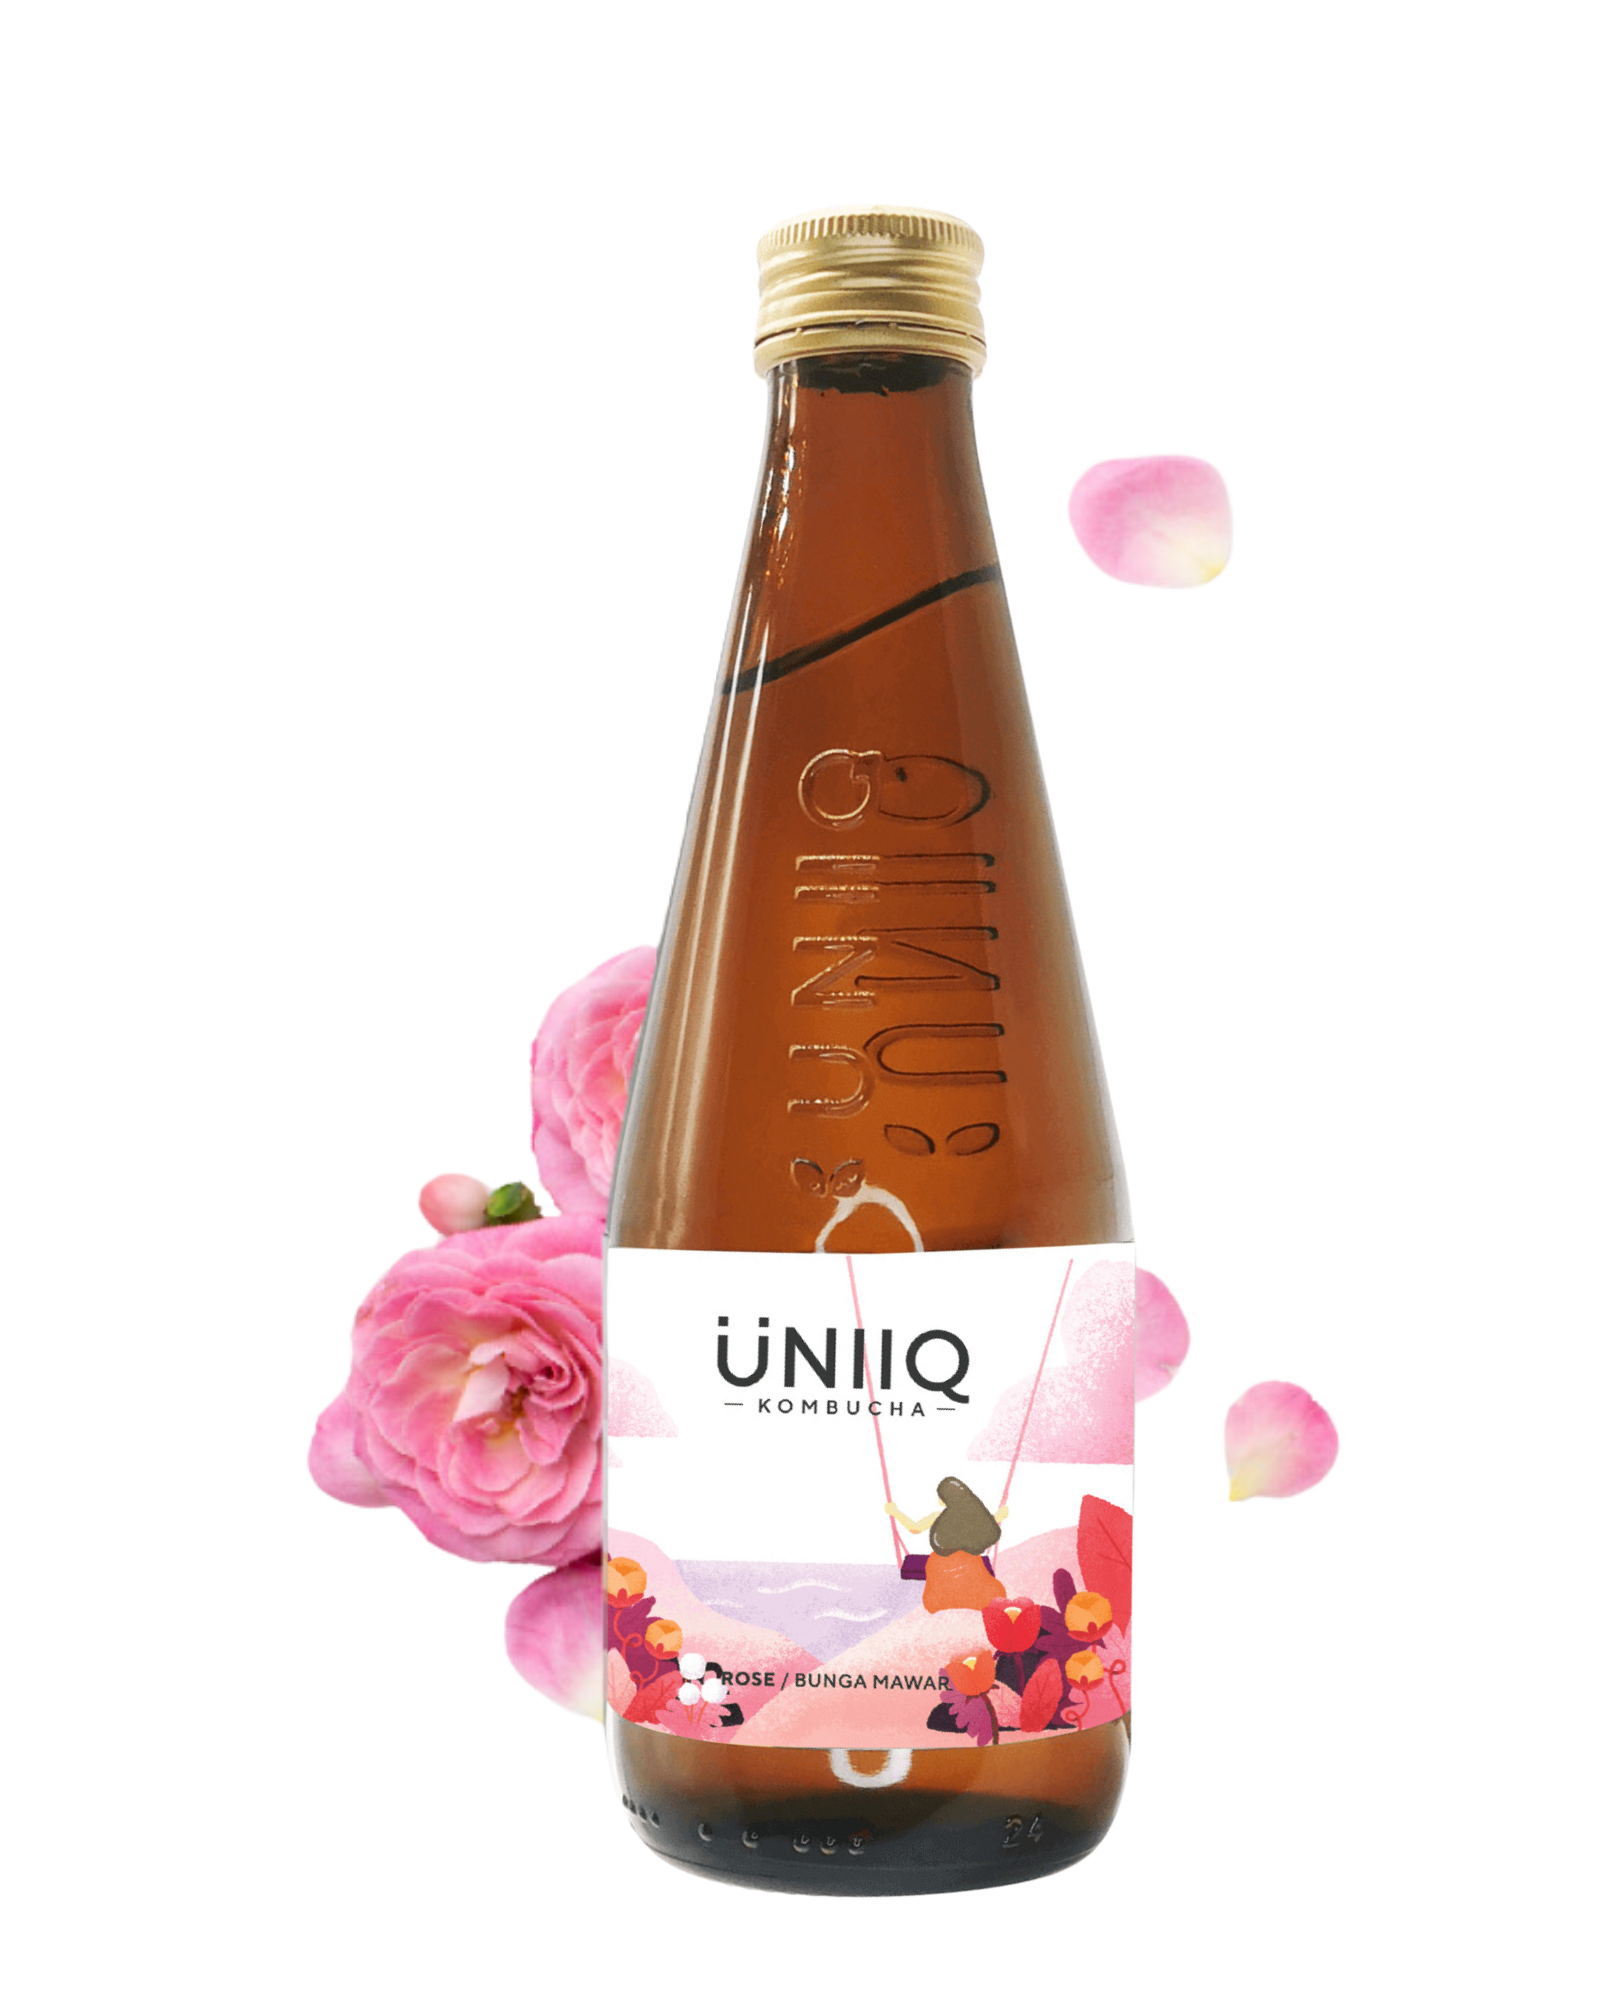 Uniiq Rose Kombucha 4x315ml - Premium Premium Mixer from Uniiq - Shop now at Whiskery